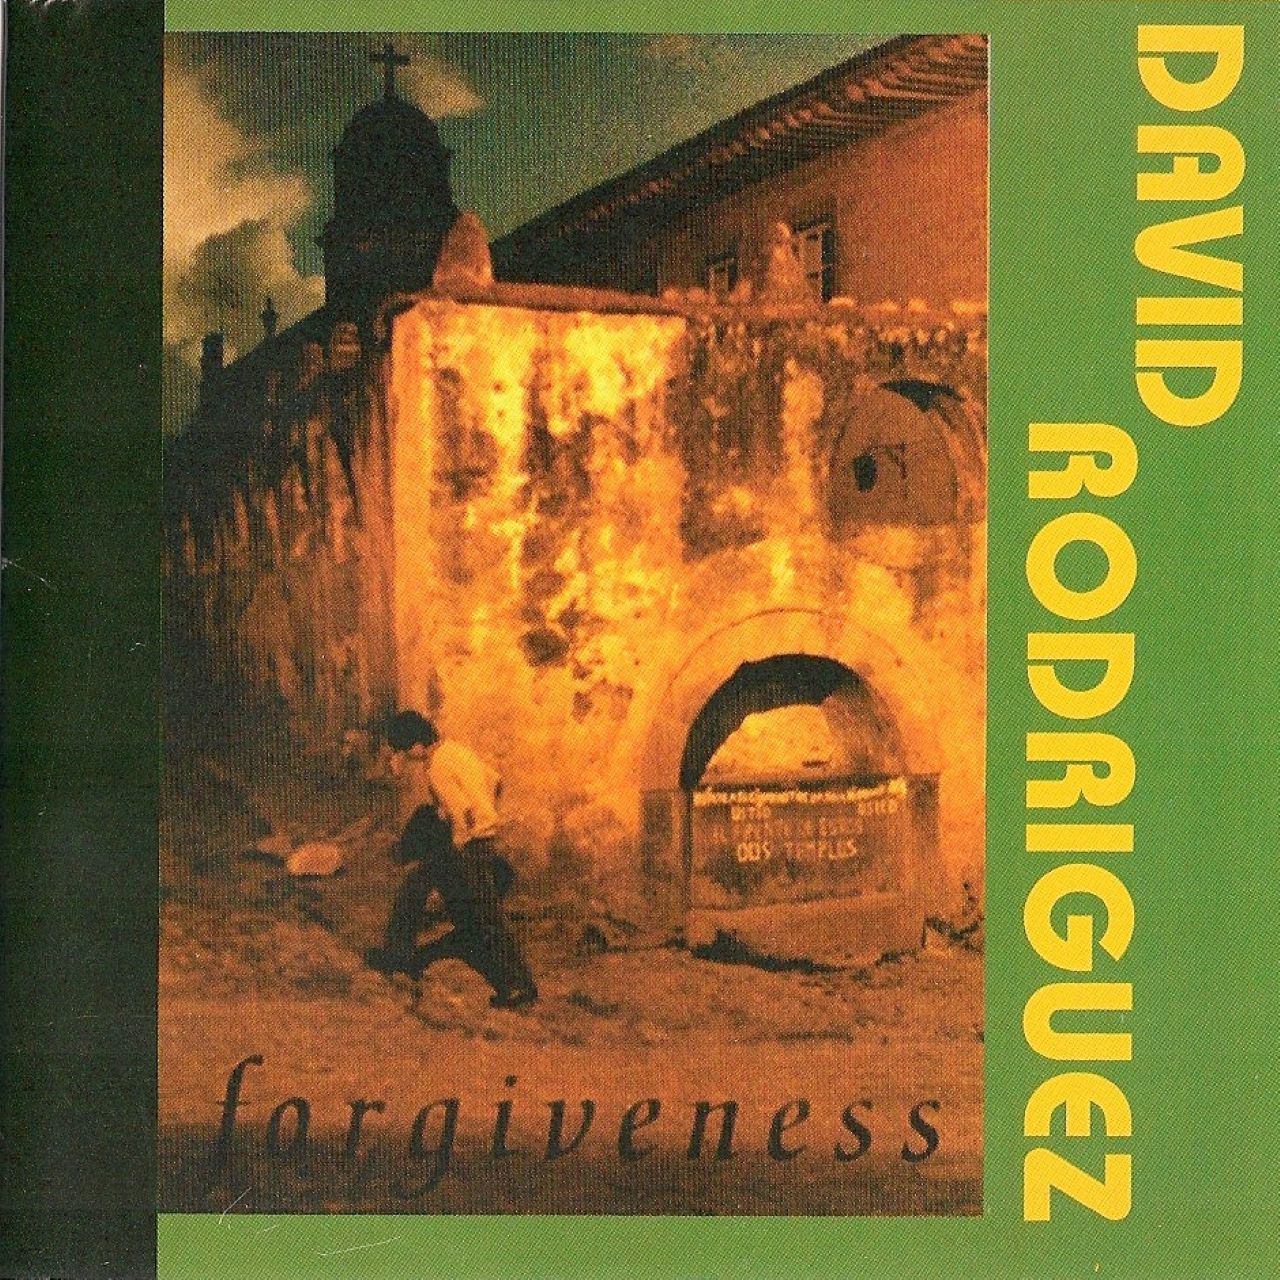 David Rodriguez - Forgiveness cover album